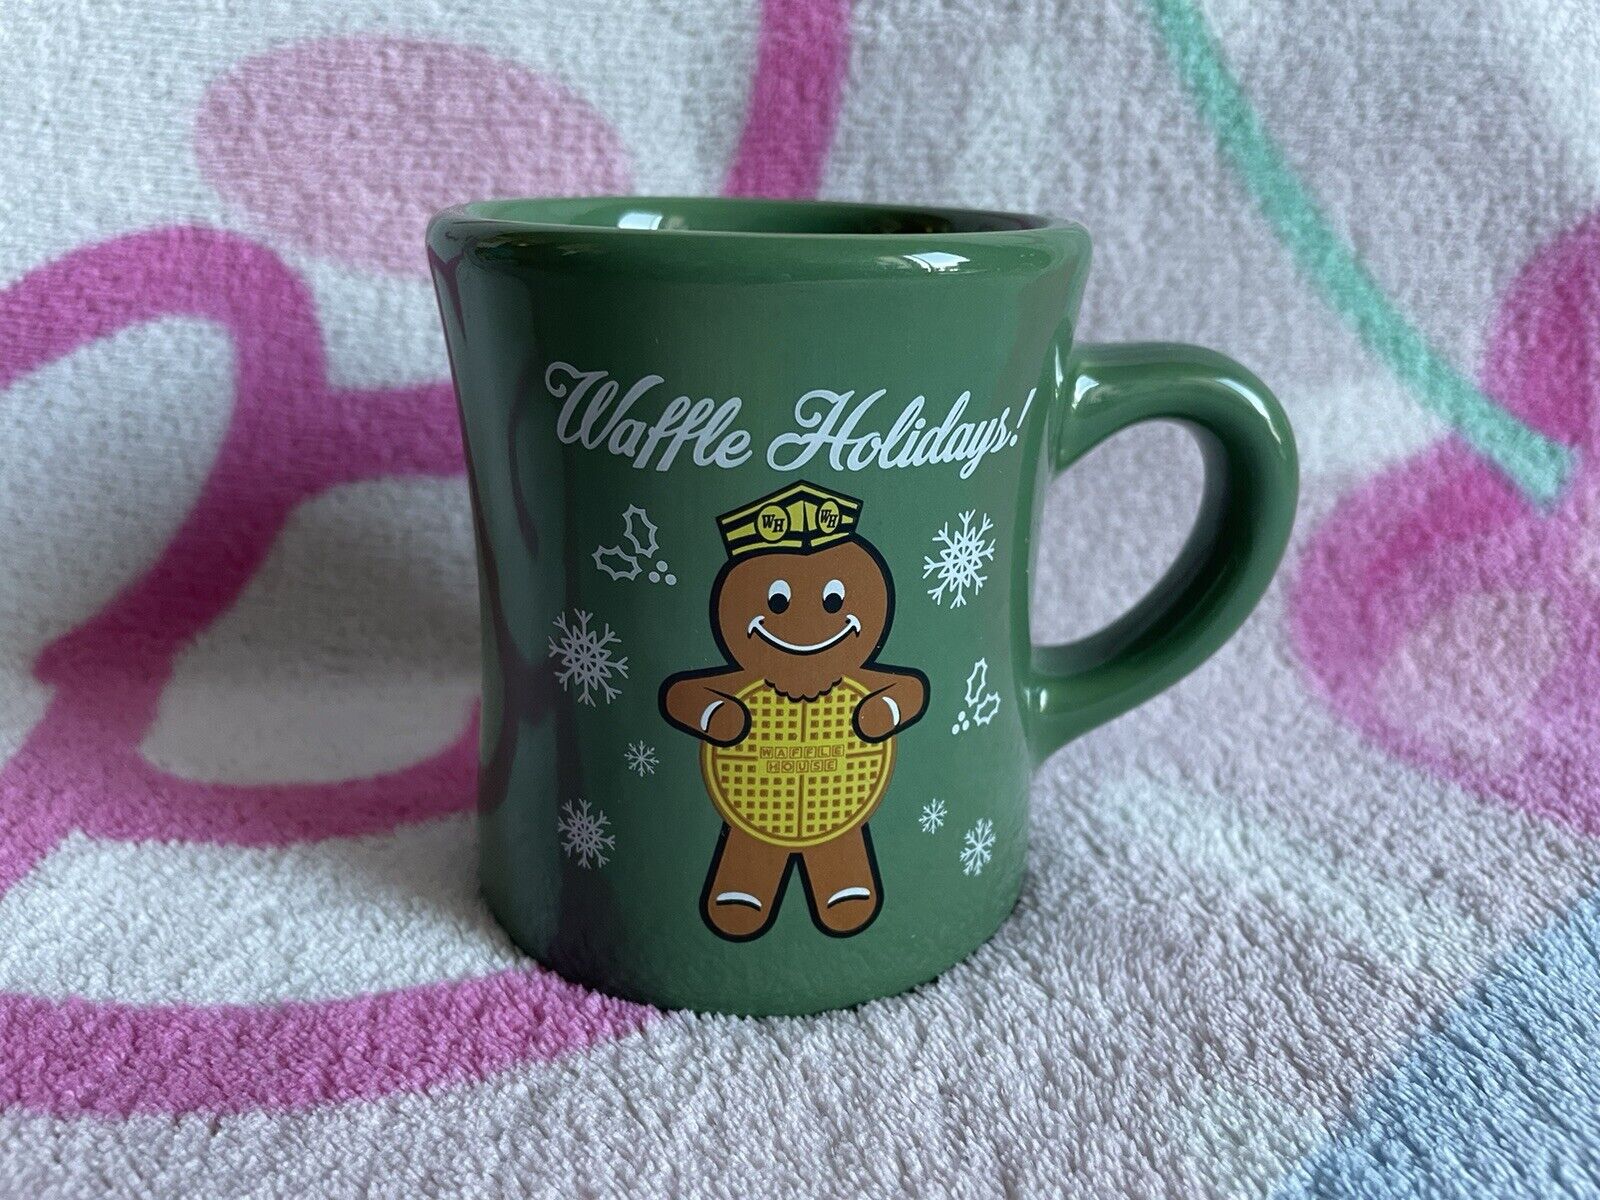 Waffle House 2016 Waffle Holiday Gingerbread Green Coffee Mug Restaurant Ware